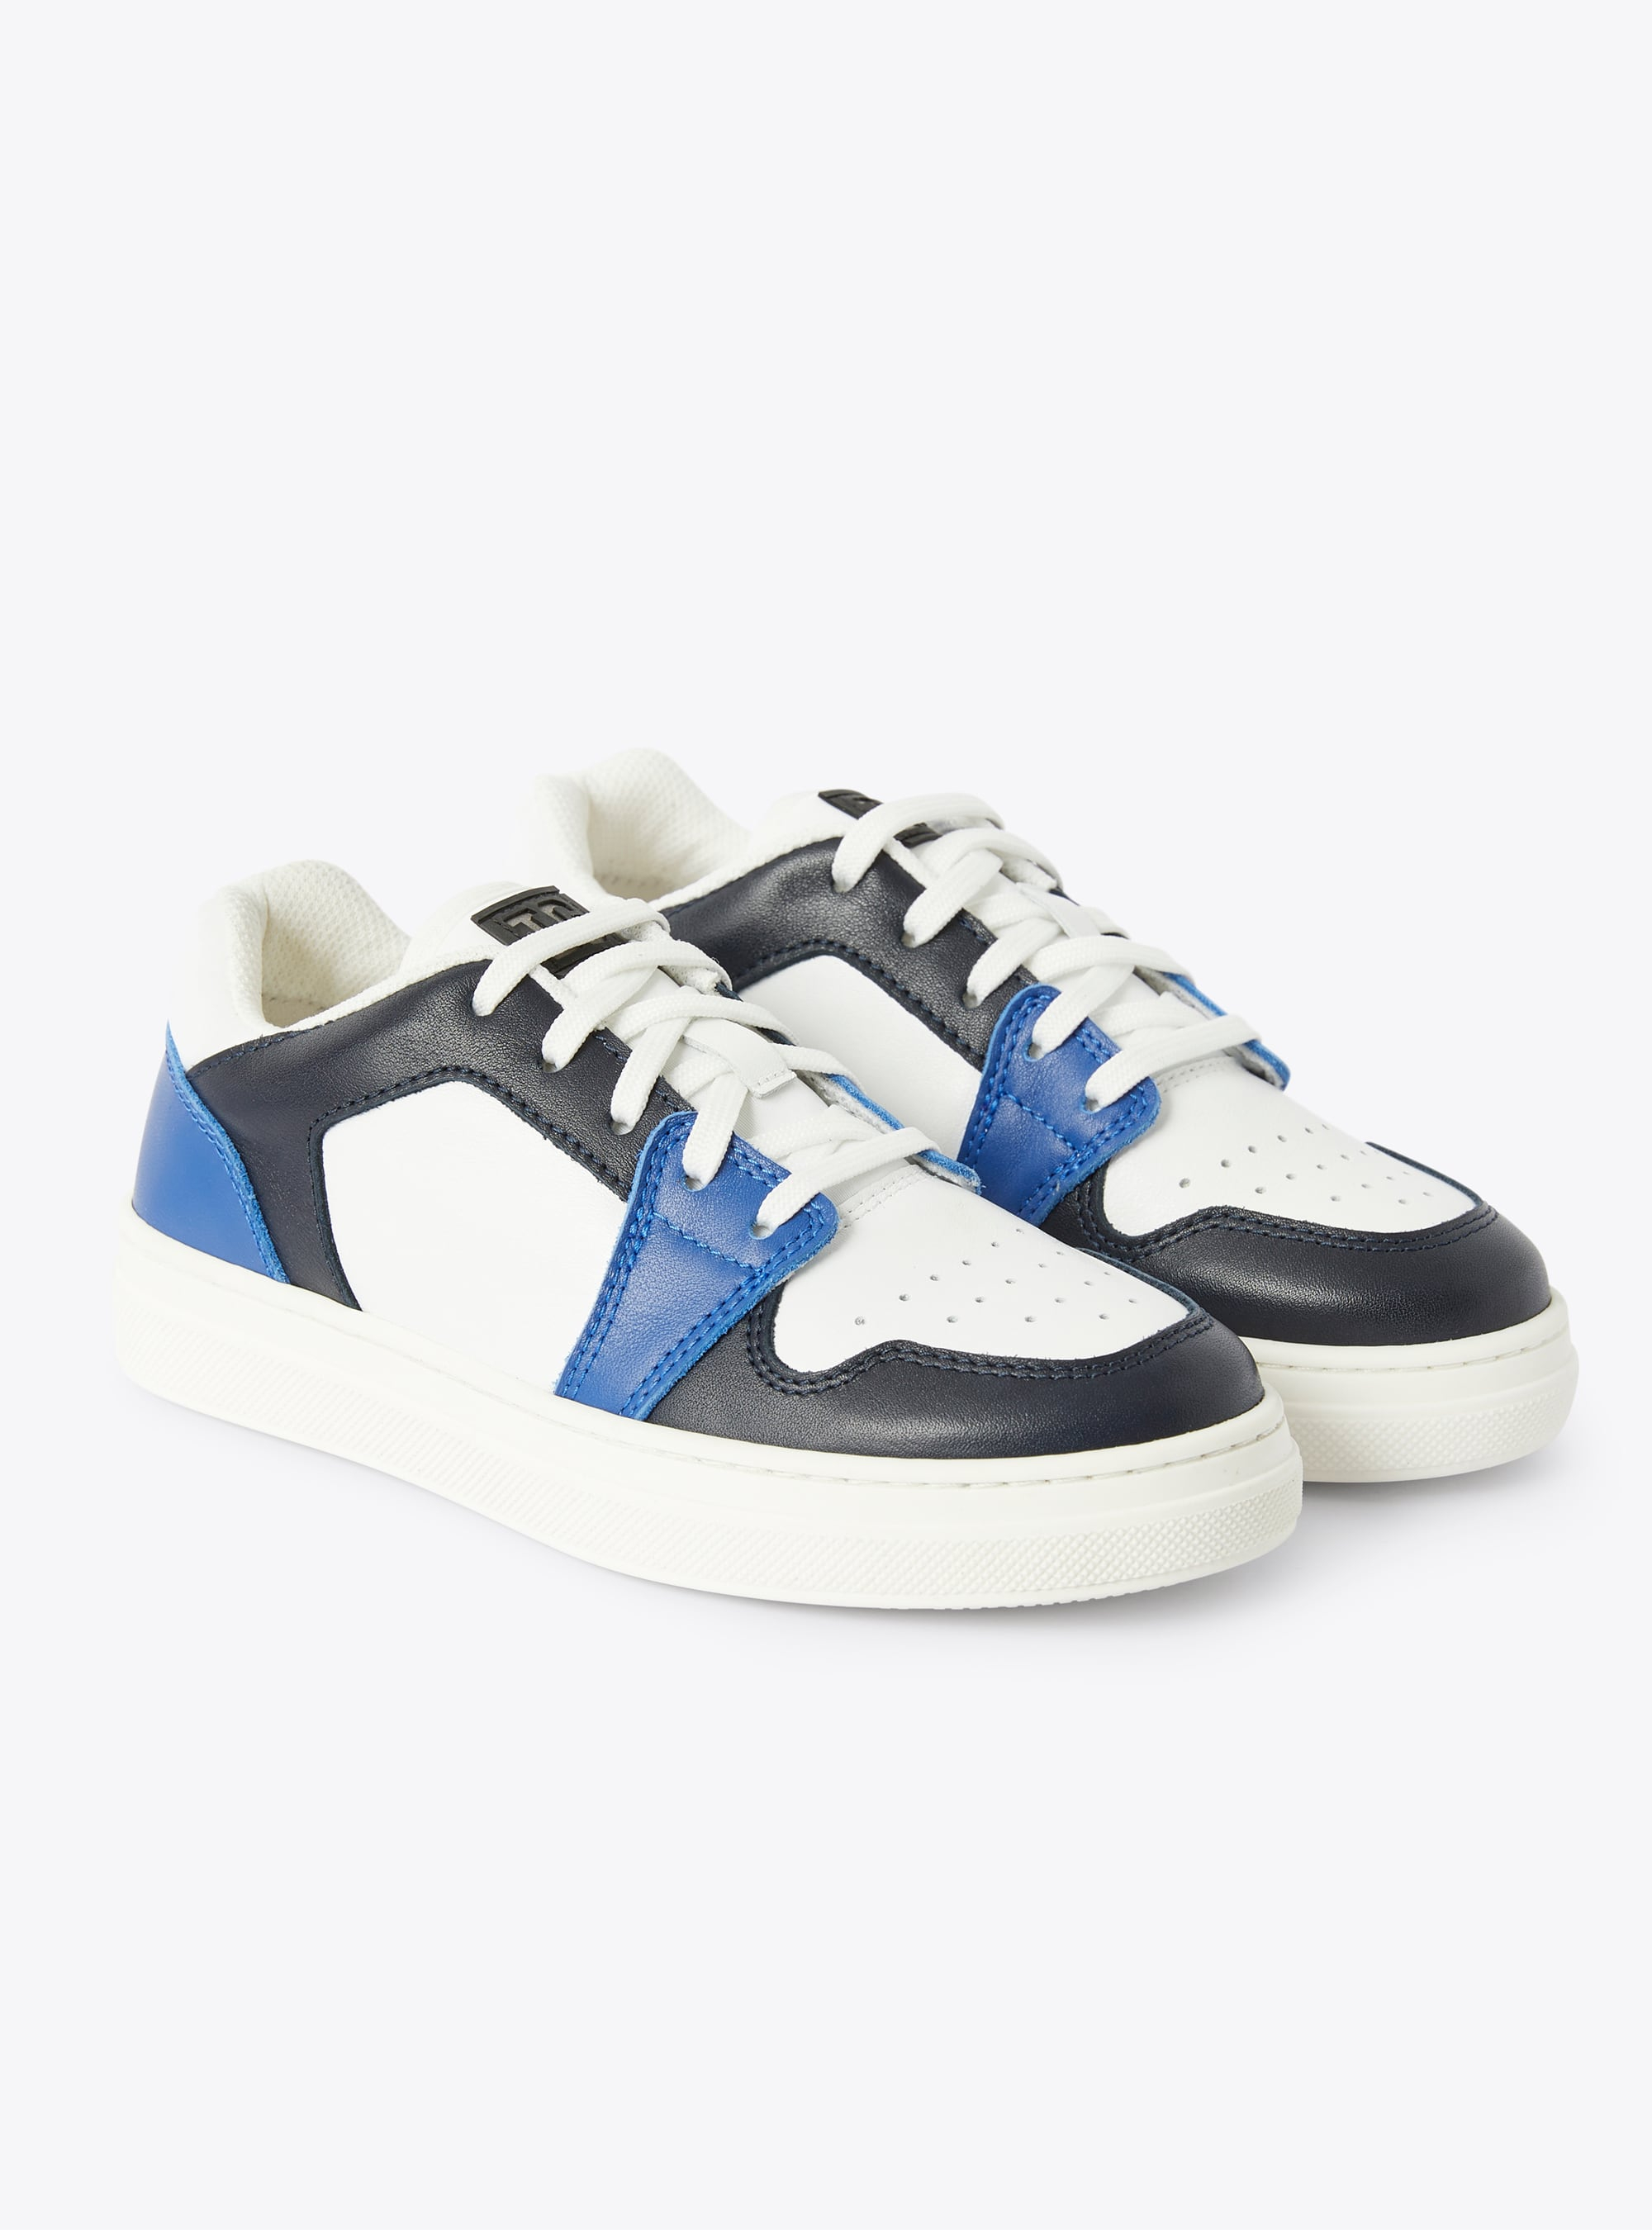 Niedrig geschnittene Sneakers IG, zweifarbig kobaltblau und blau - Schuhe - Il Gufo